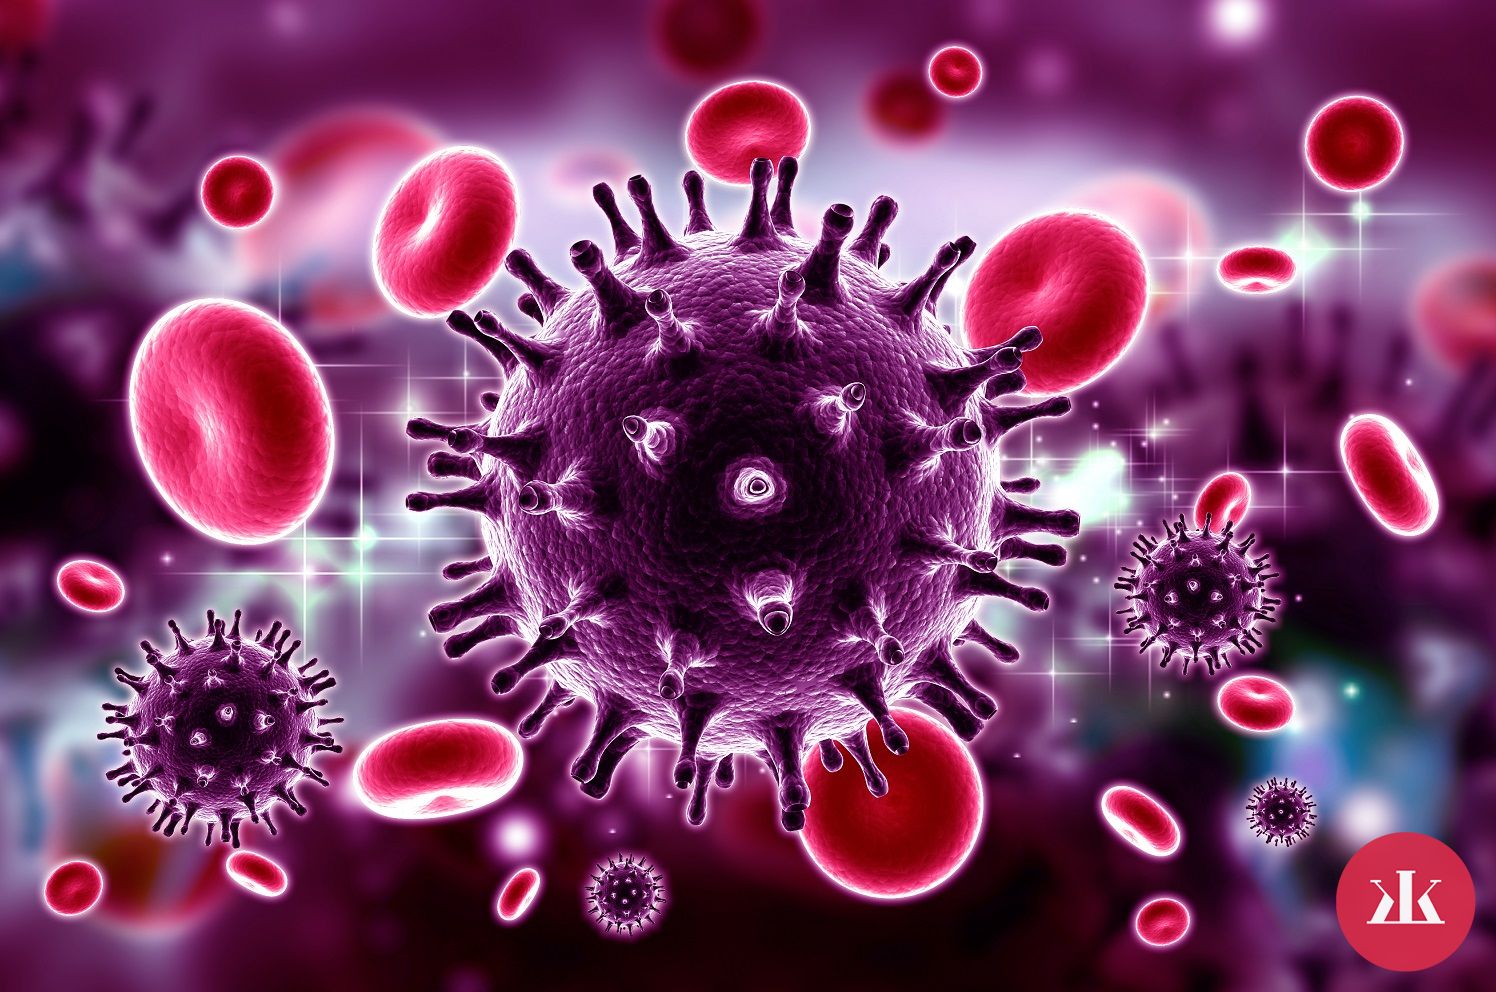 vírus HIV